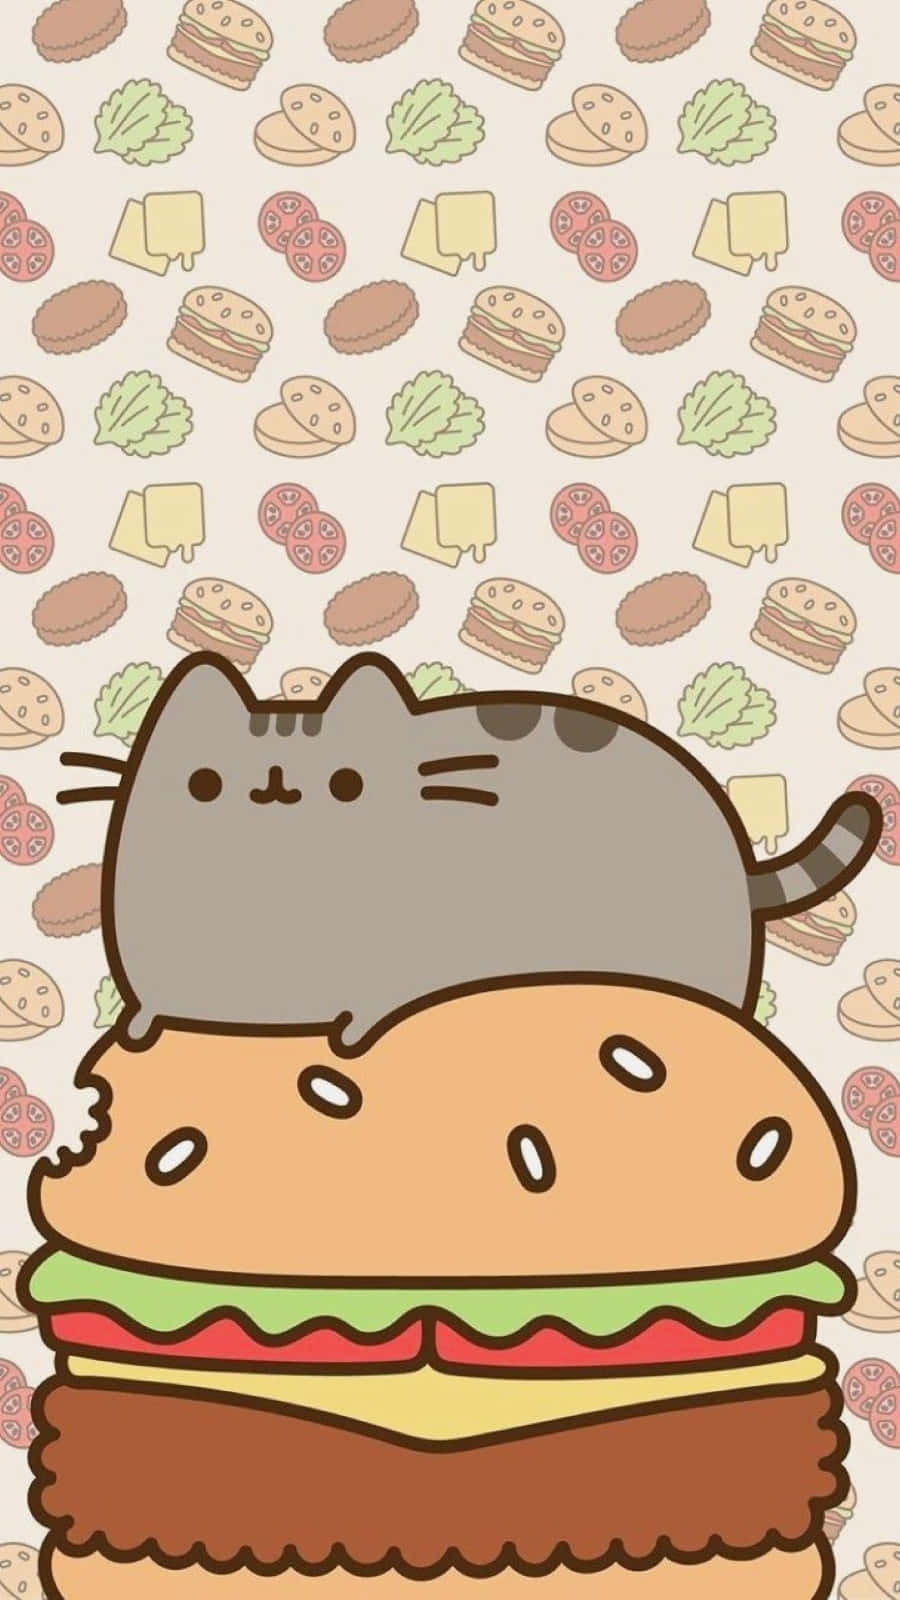 Cute kawaii food illustrations with various smiling characters Wallpaper